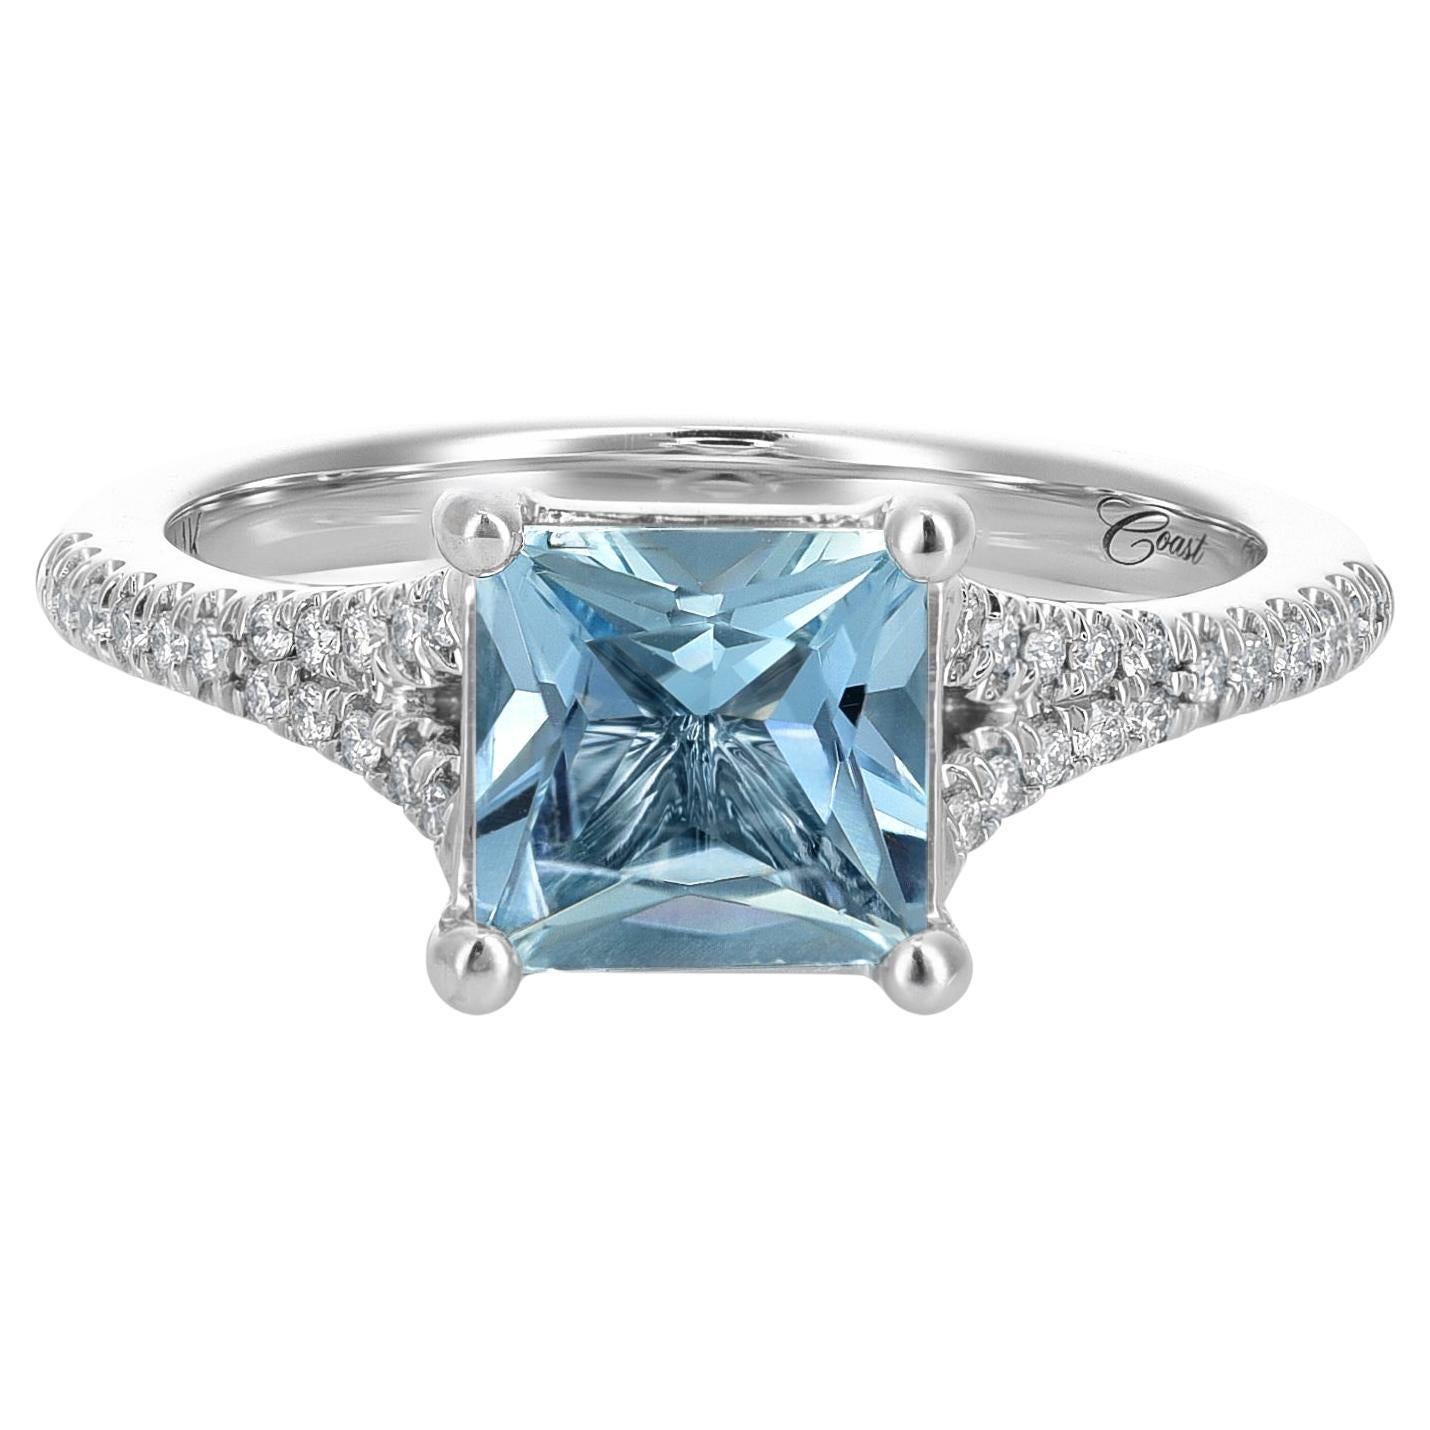 1.47 Carats Aquamarine Diamonds set in 14K White Ring